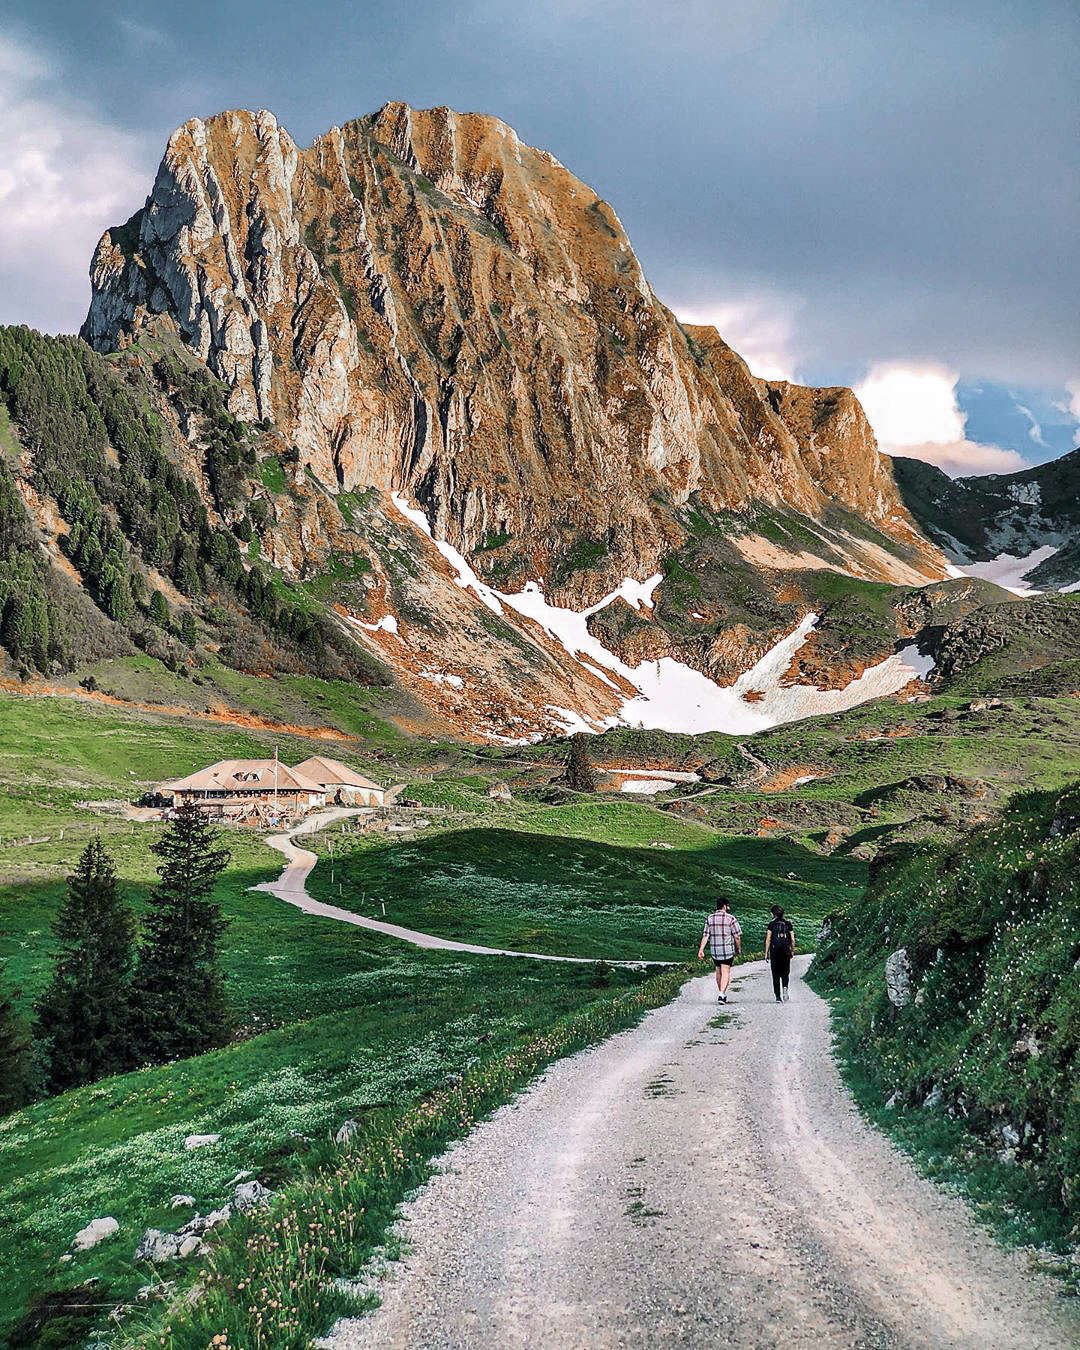 mountain landscape photographed using telephoto lens